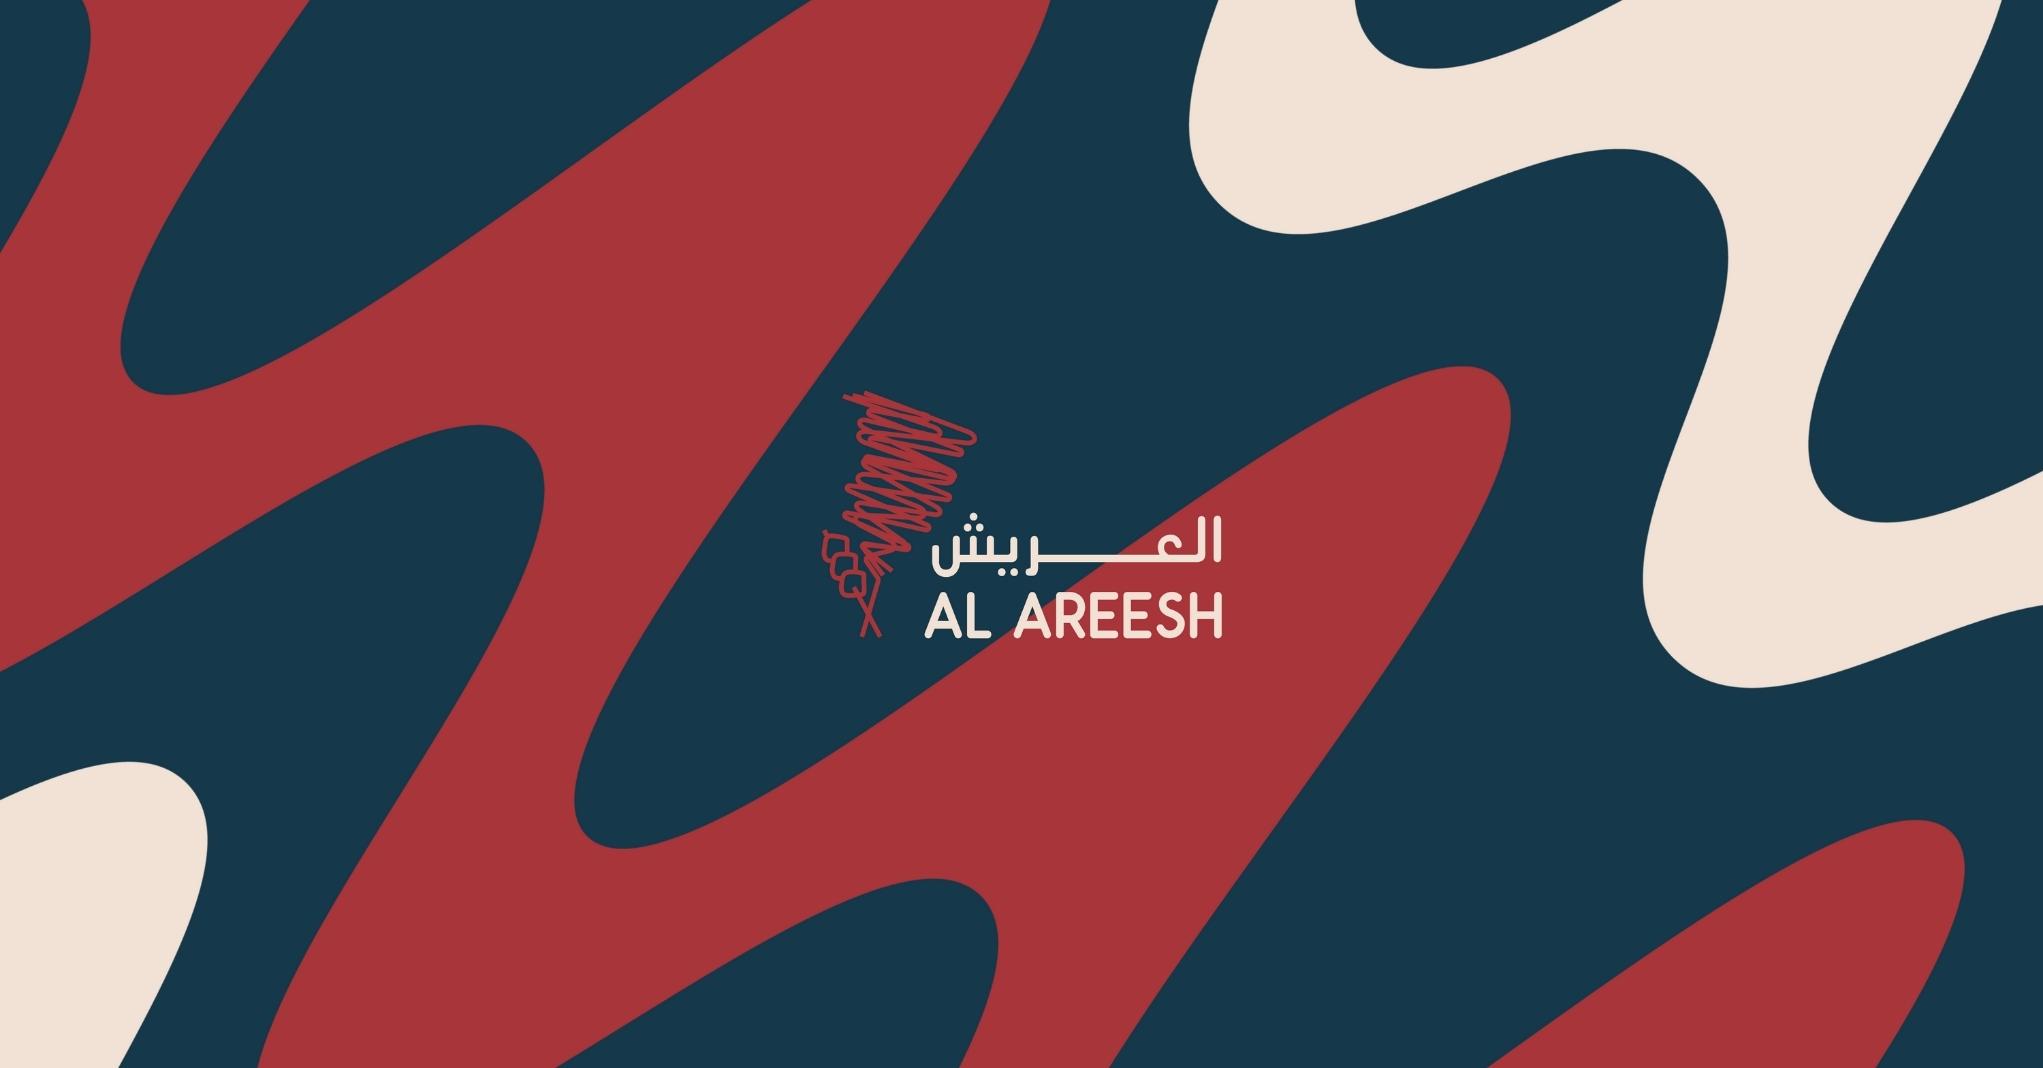 Al Areesh Restaurant Rebranding in Abu Dhabi